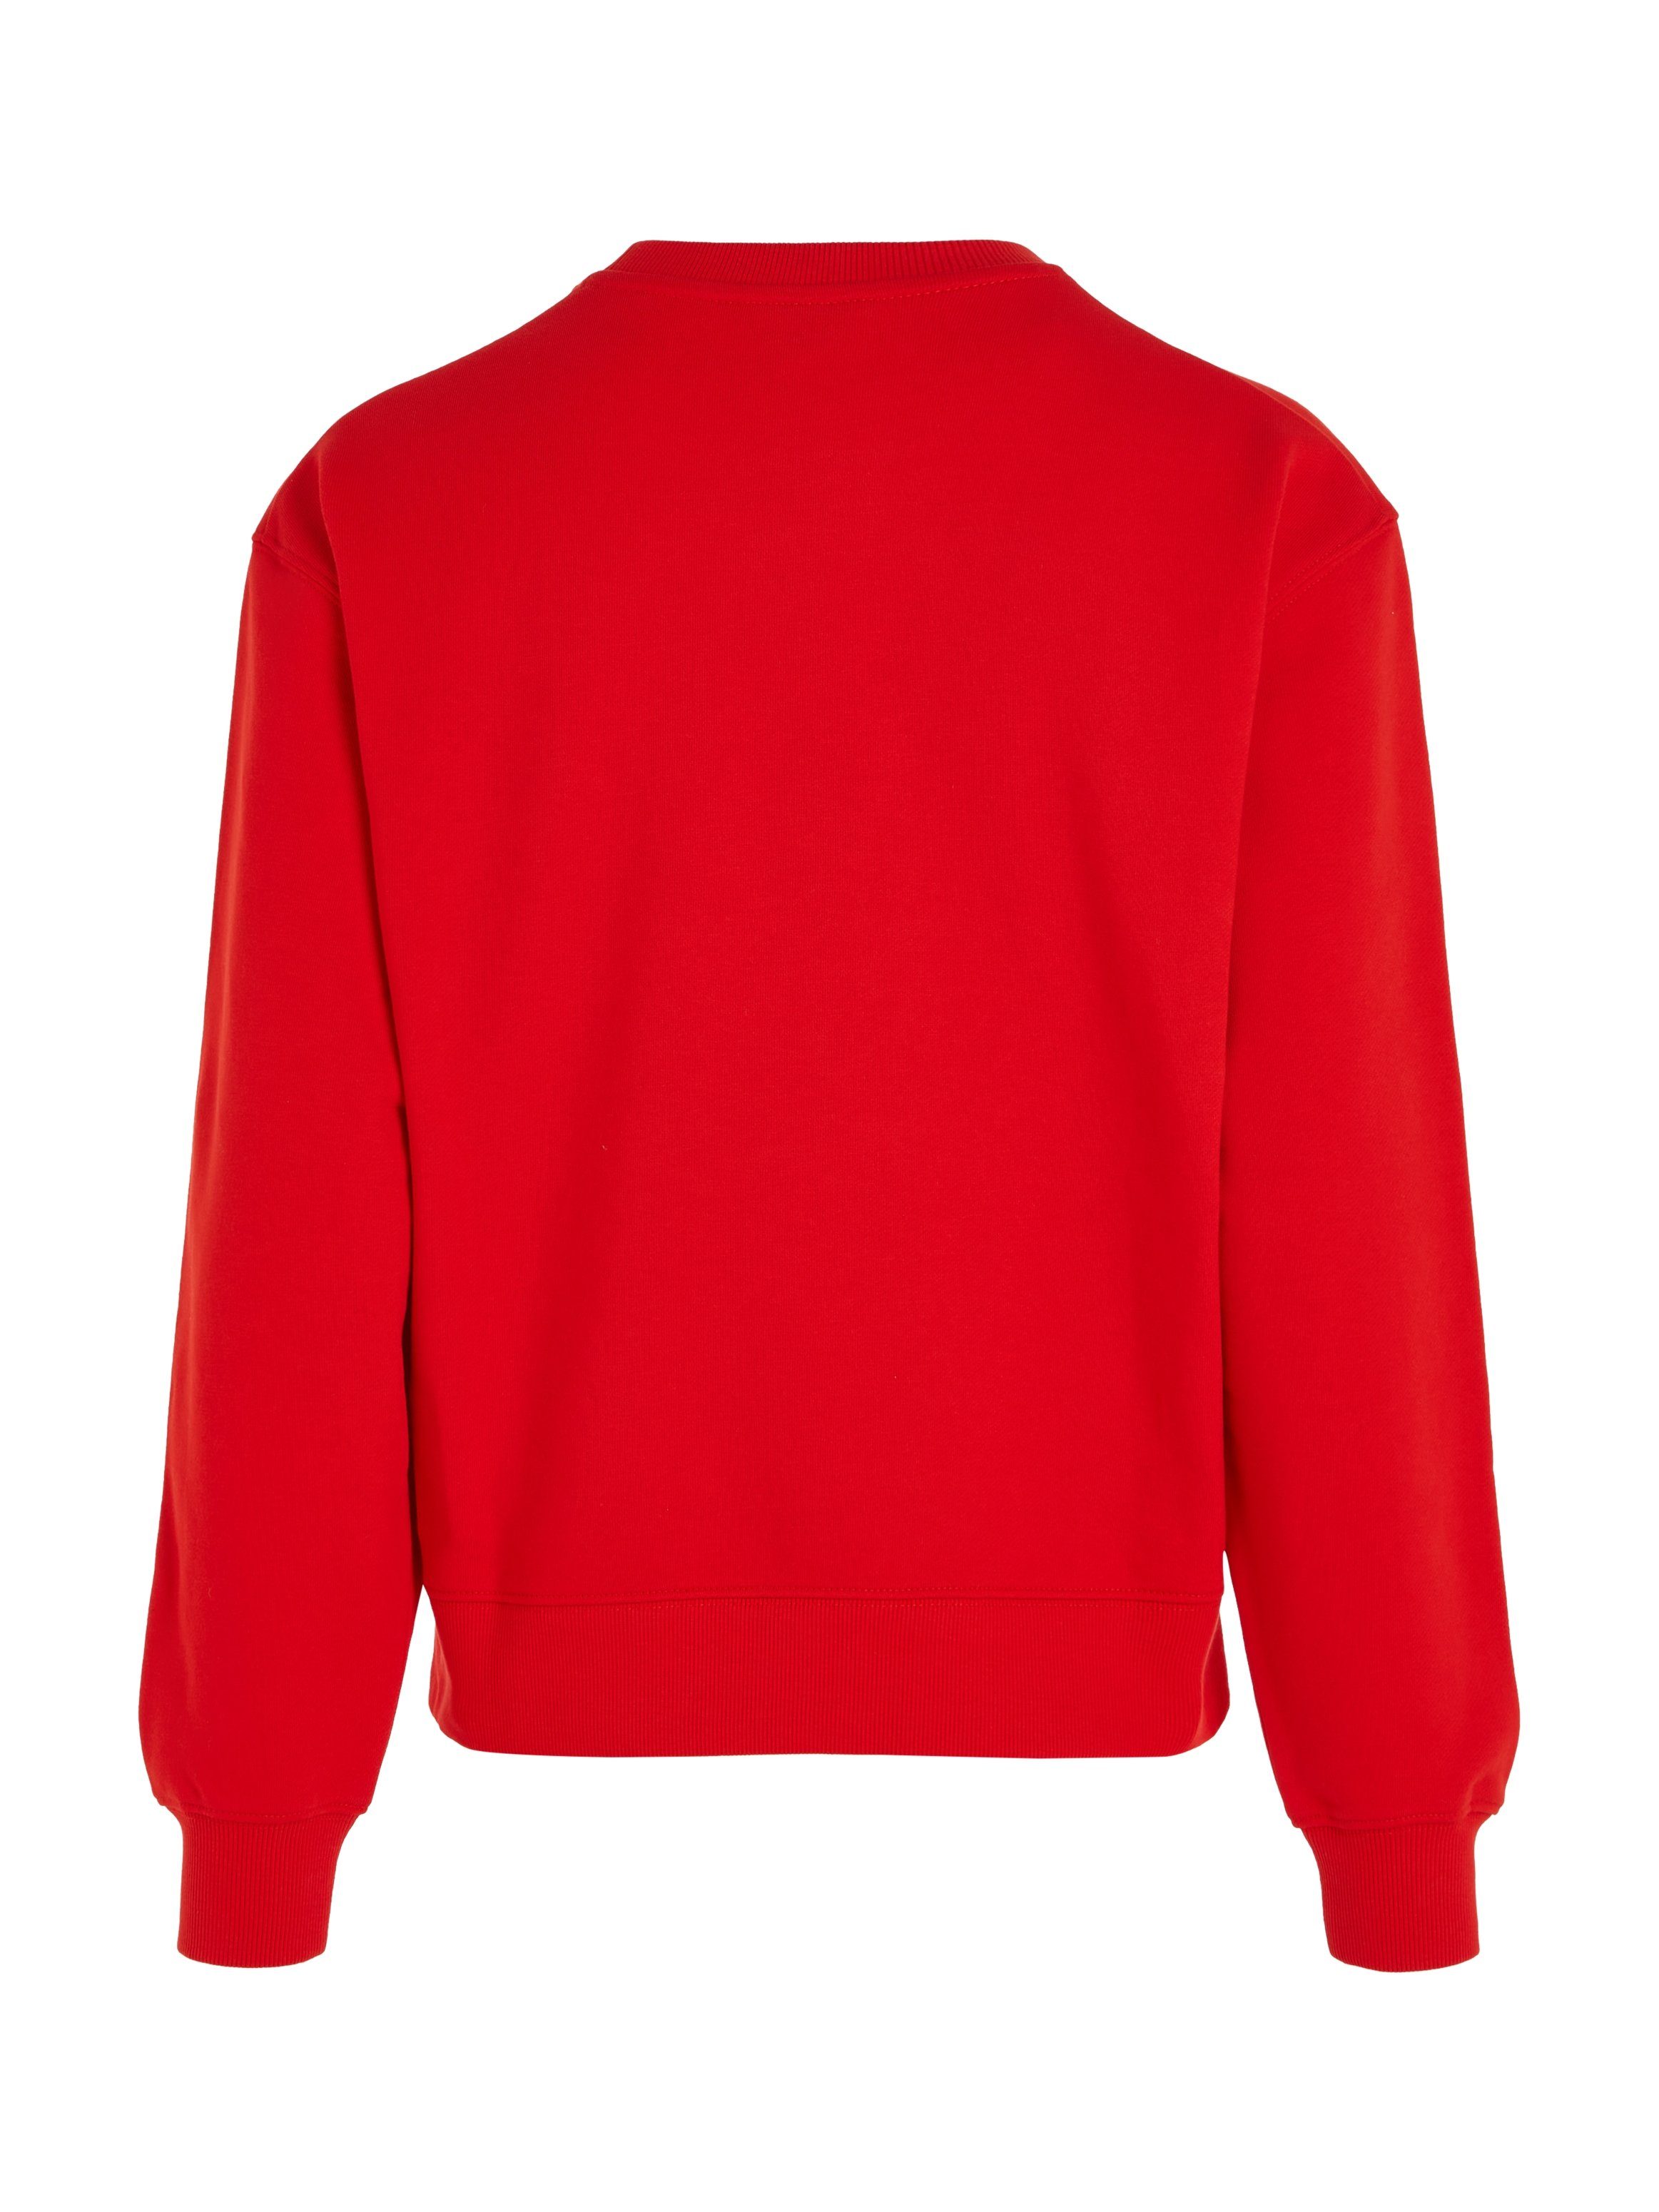 Hilfiger H85 TERRY SWEATSHIRT REG Sweatshirt C-NK Tommy Fierce_Red